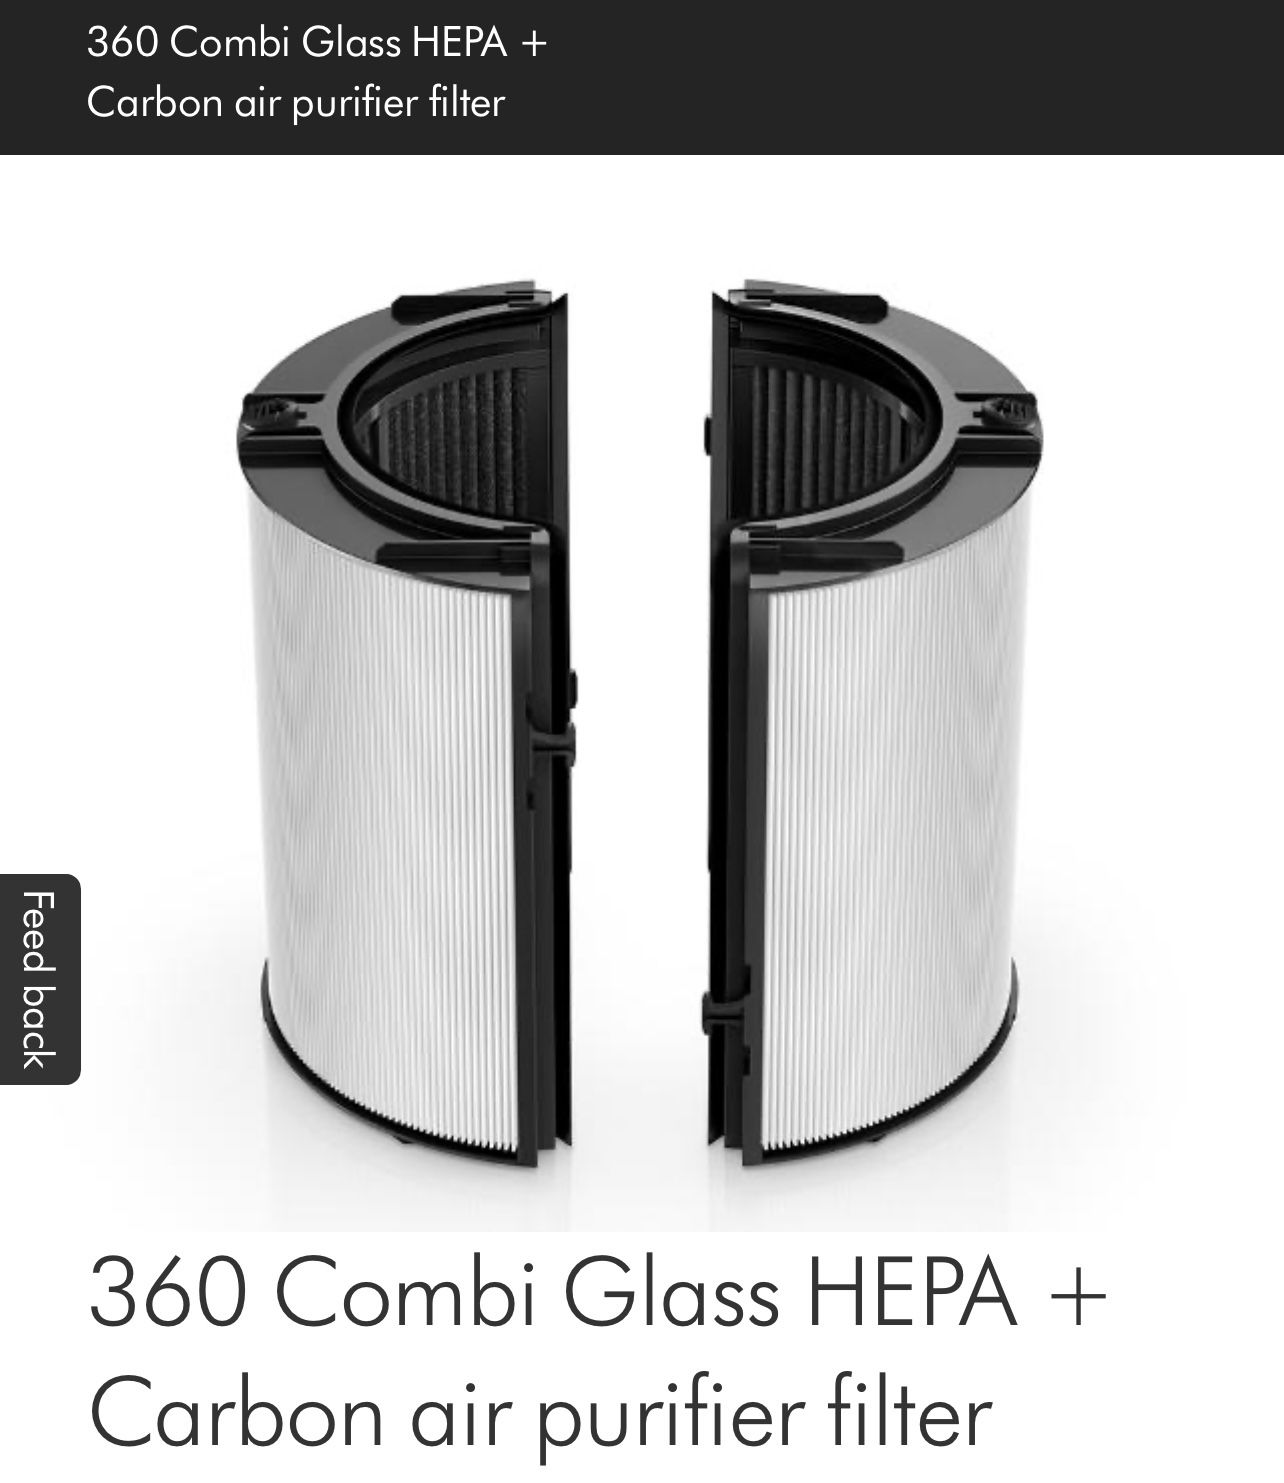 DYSON 360 COMBI GLASS HEPA FILTER 